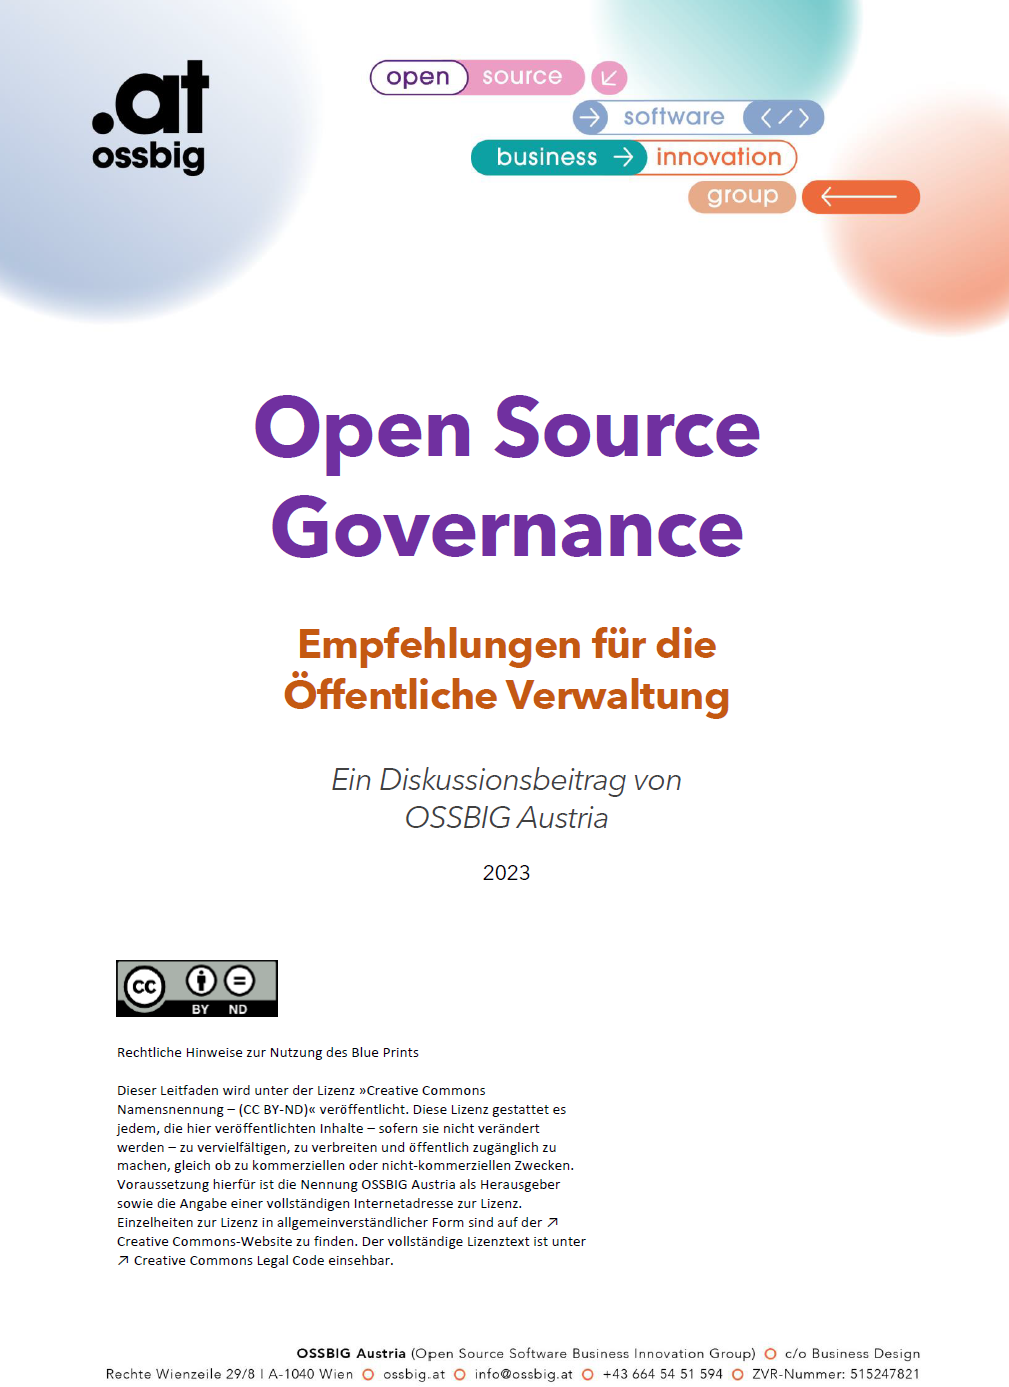 Open Source Governance